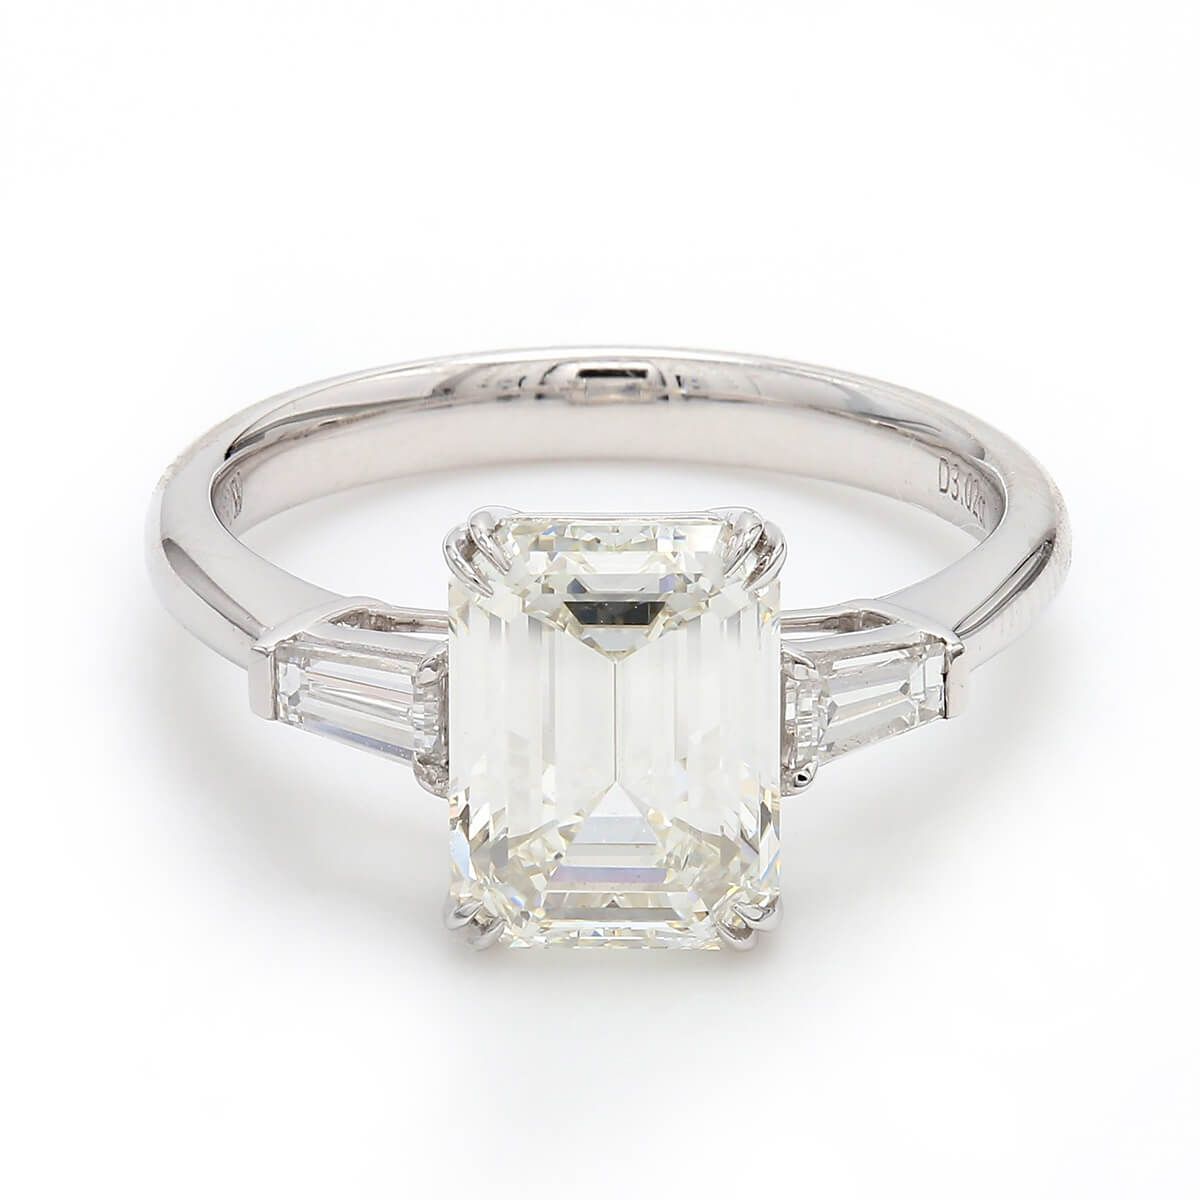  White Diamond Ring, 3.36 Ct. TW, Emerald shape, GIA Certified, 2191208445